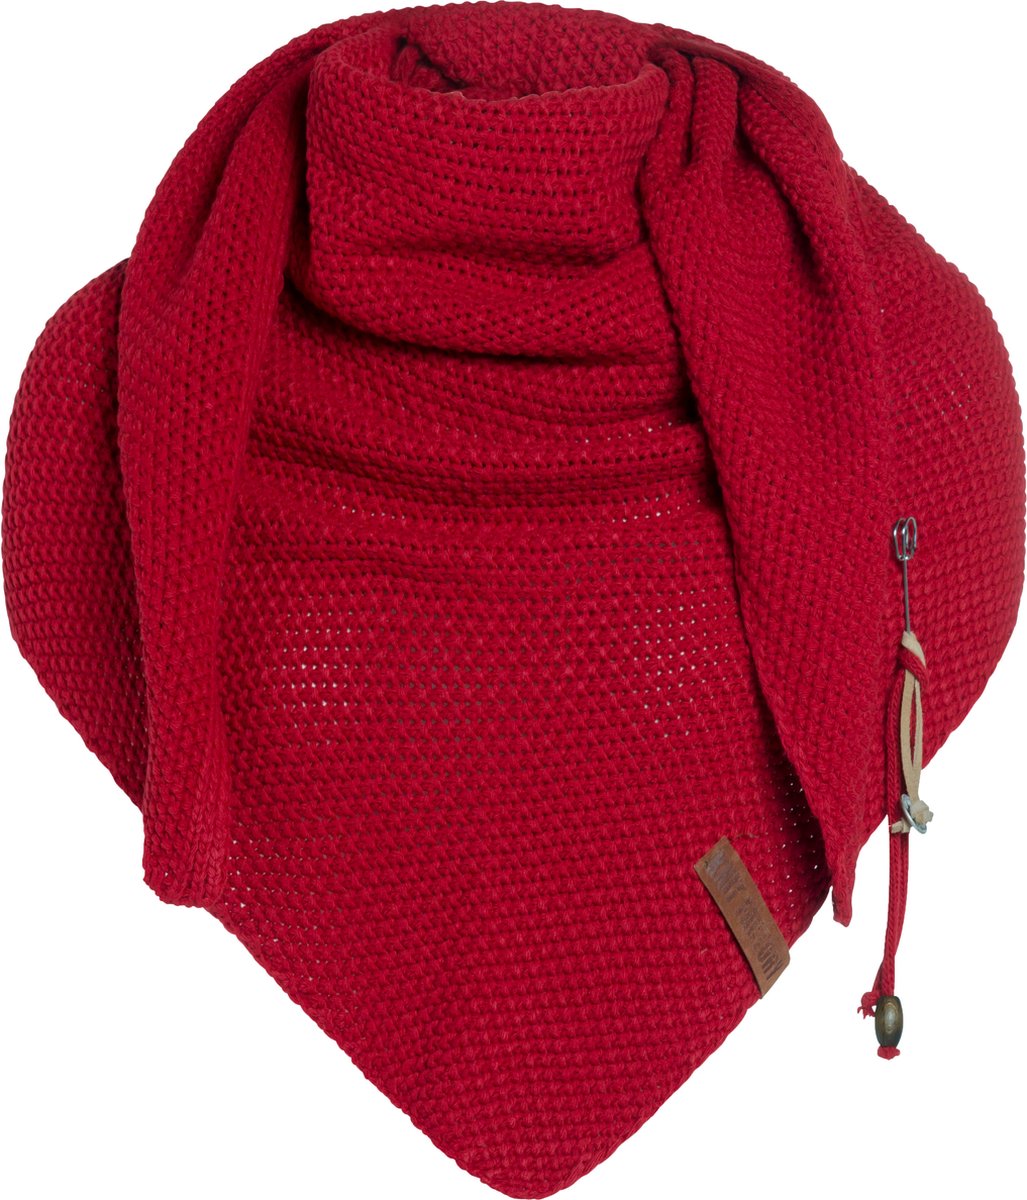 Knit Factory Coco Gebreide Omslagdoek - Driehoek Sjaal Dames - Dames sjaal - Wintersjaal - Stola - Wollen sjaal - Rode sjaal - Bright Red - 190x85 cm - Inclusief sierspeld